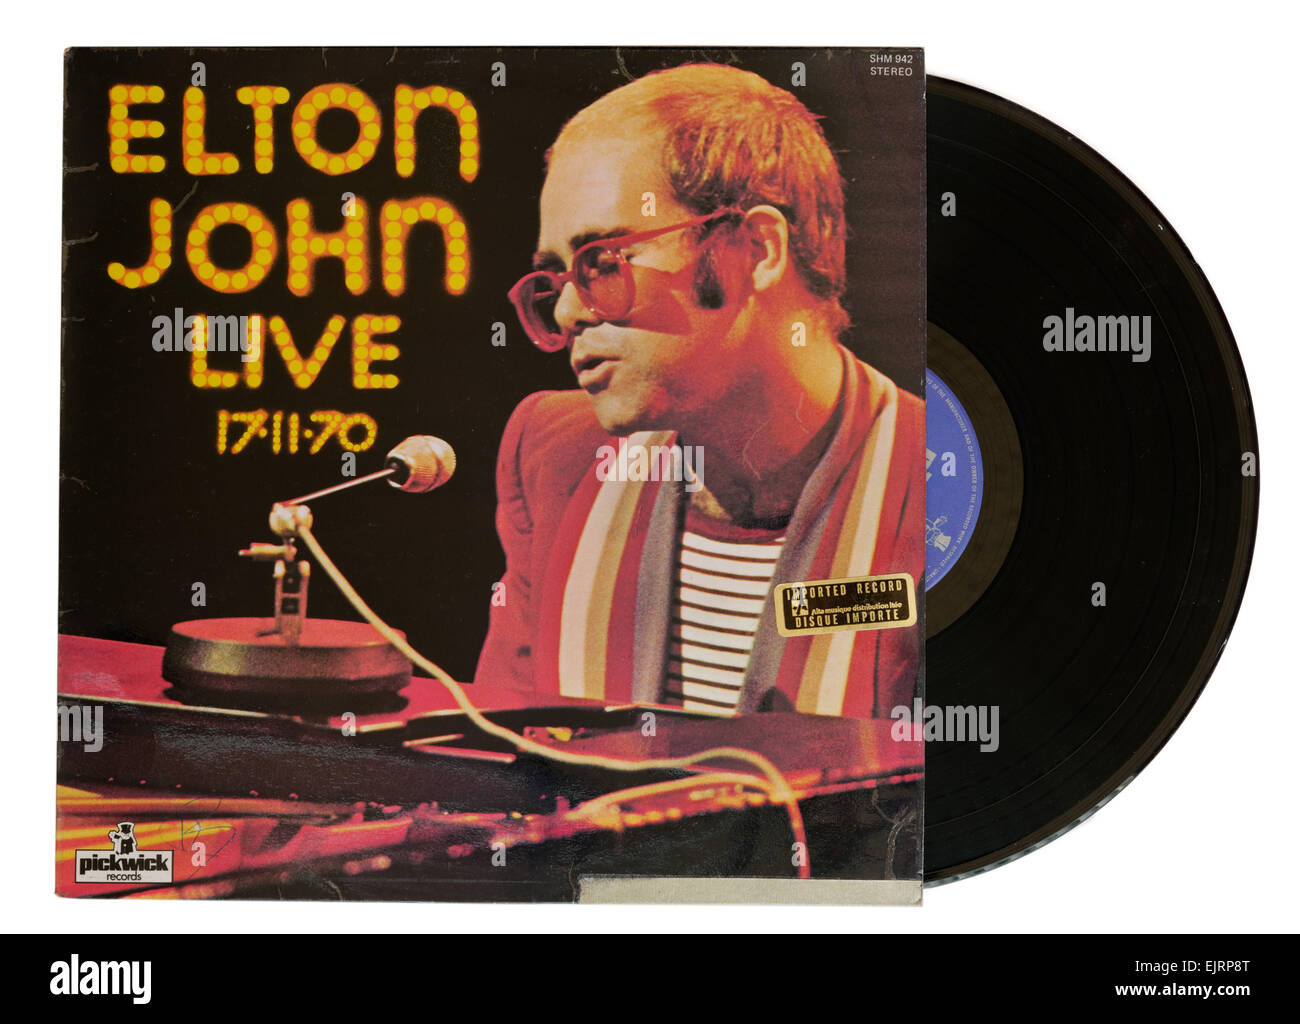 Elton john live 17-11-70 album Foto Stock